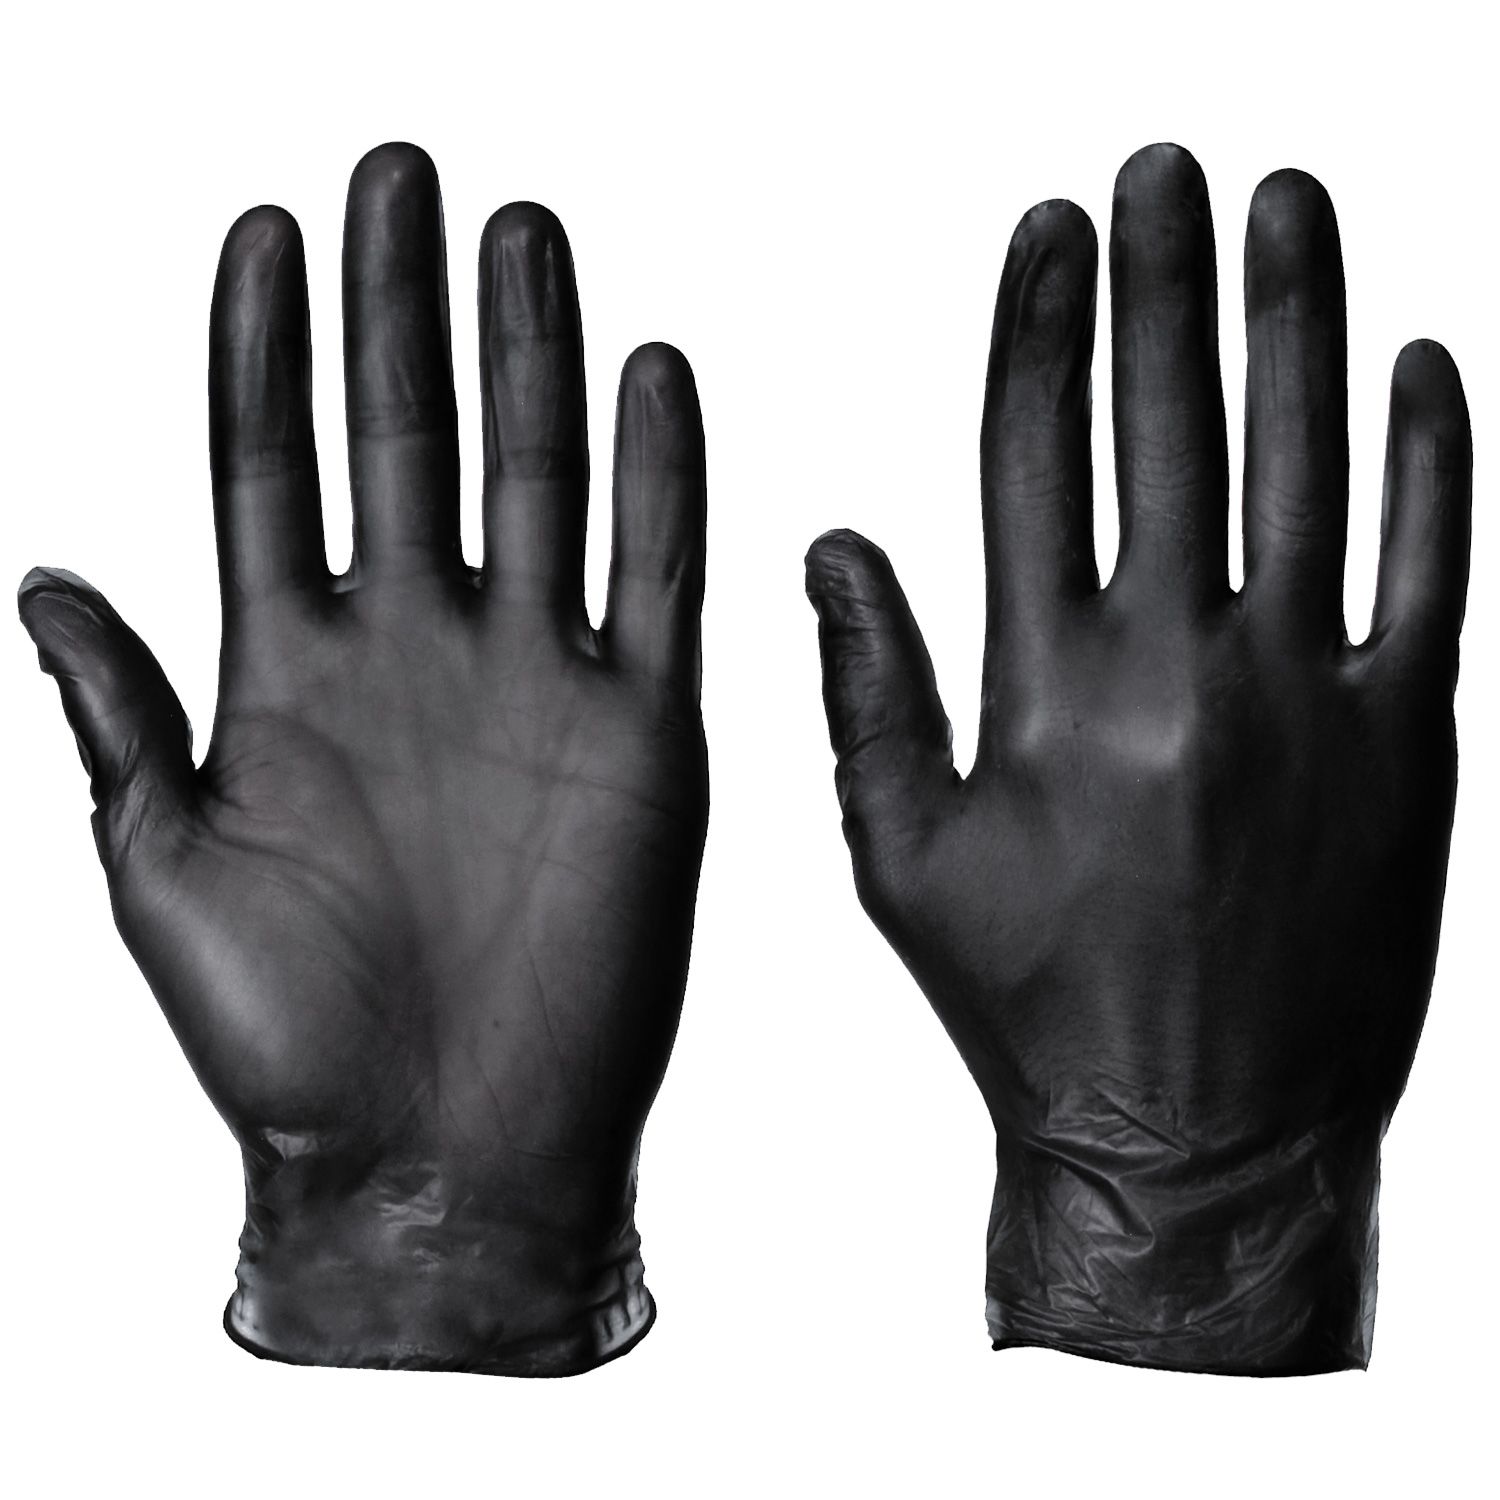 Vinyl Gloves - Powder Free - Black - Small